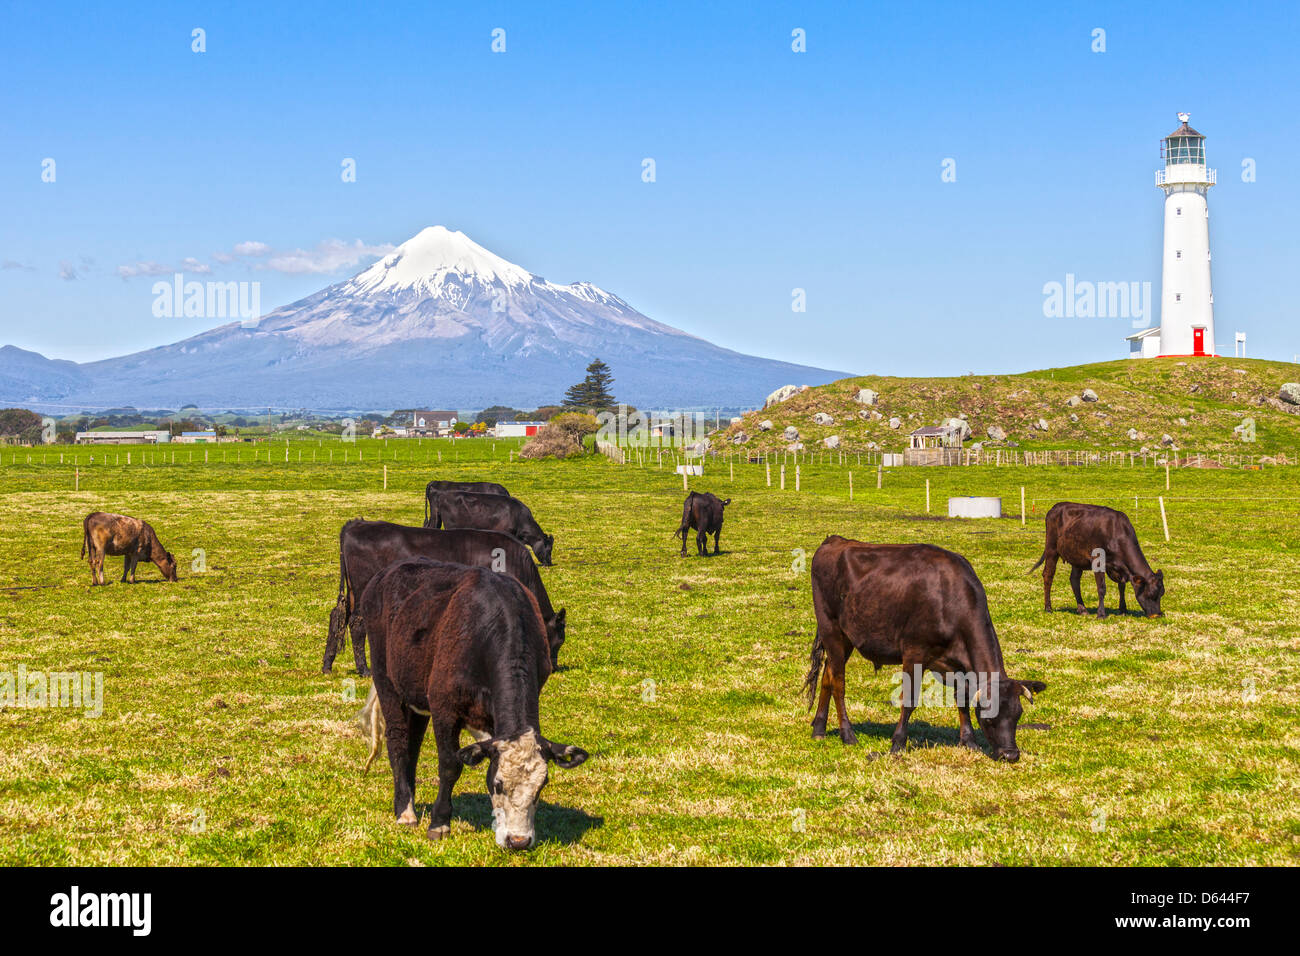 Cattle grazing near Cape Egmont Lighthouse in the Taranaki Region of New Zealand, with Taranaki/Mount Egmont in the distance. Stock Photo